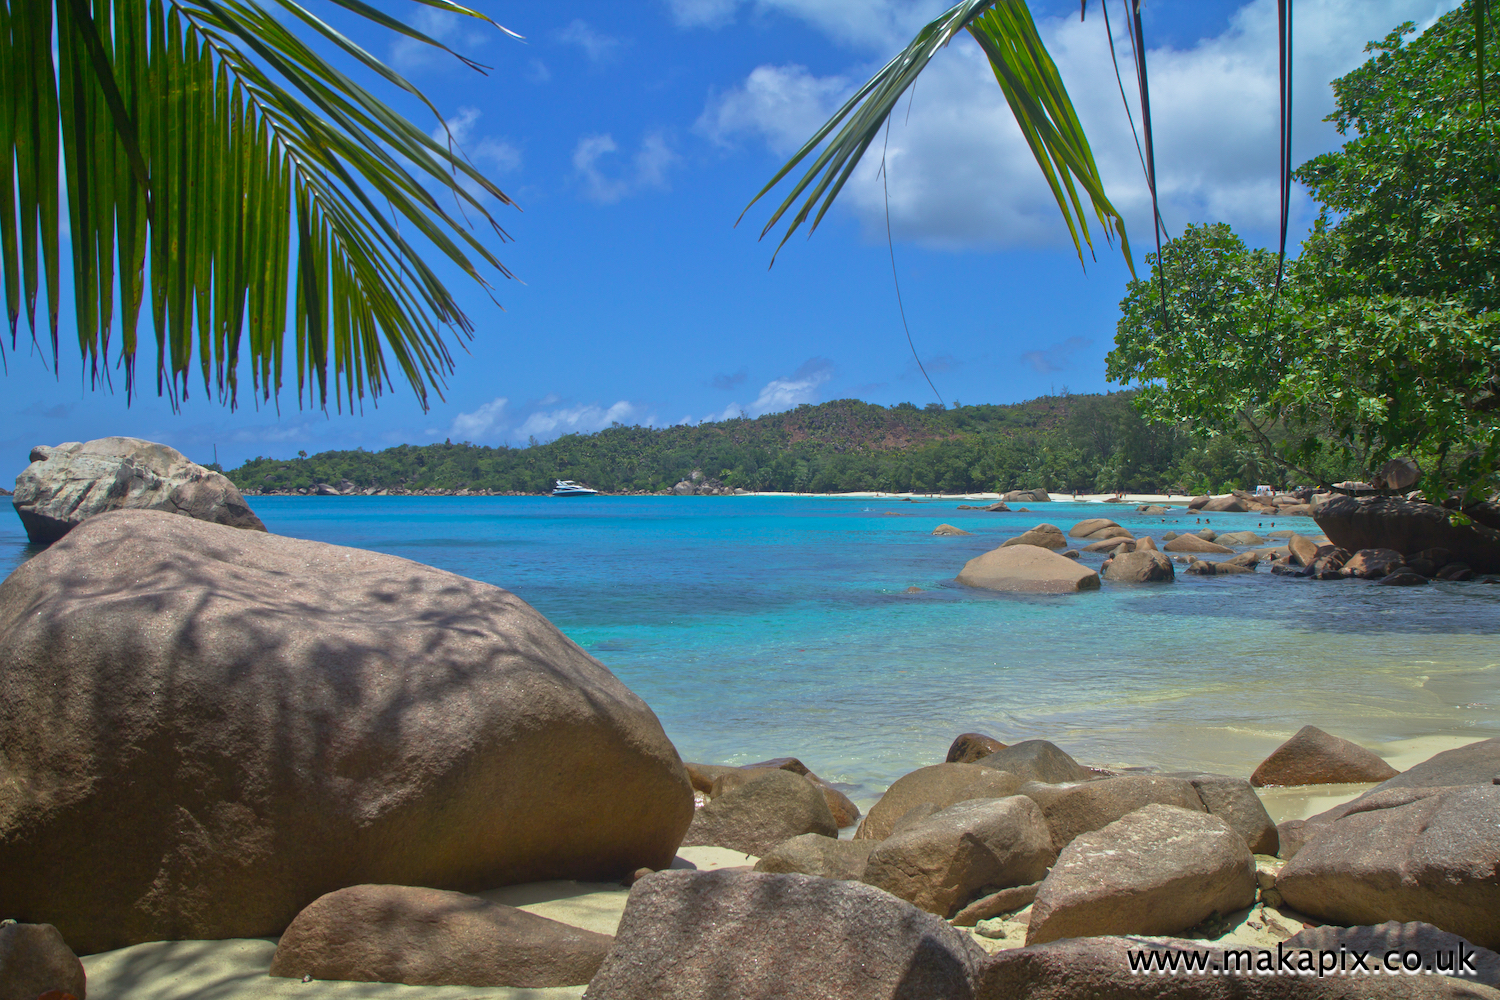 Anse Lazio beach, Praslin island, Seychelles